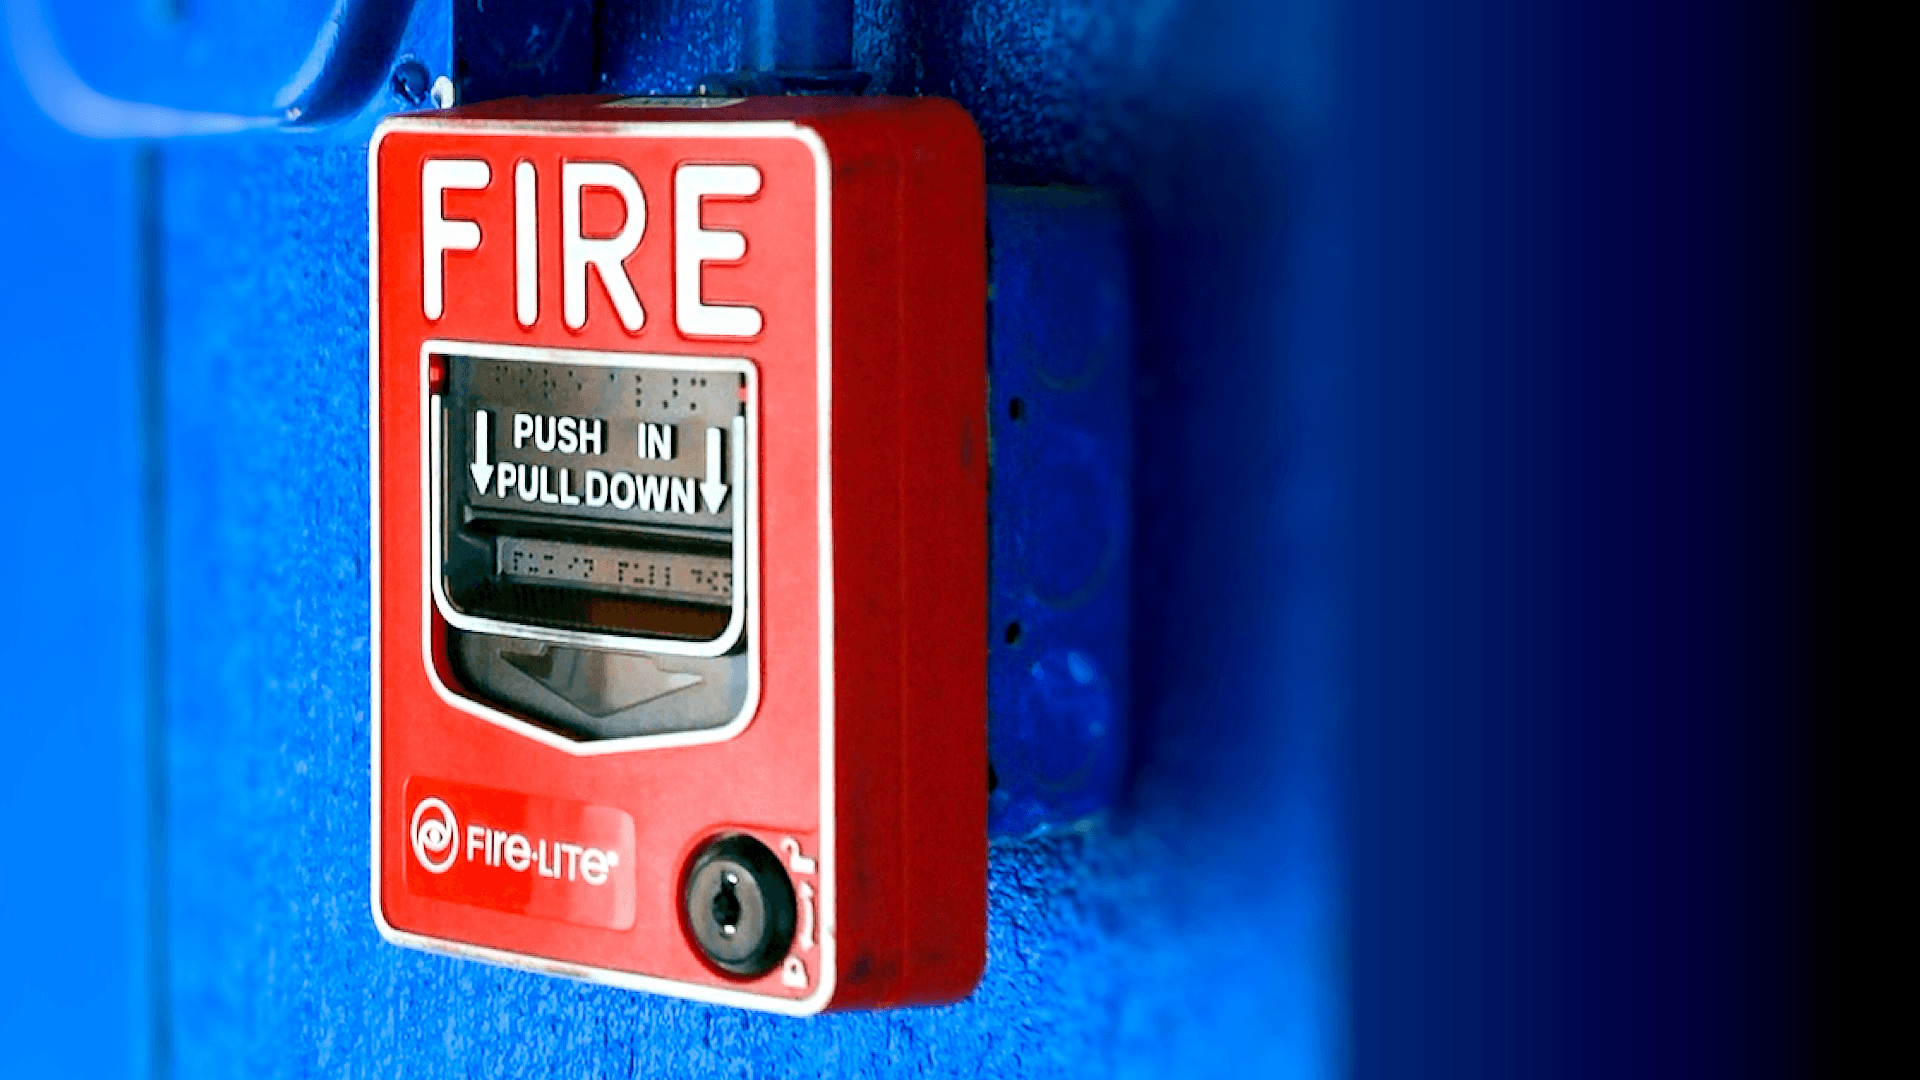 Fire Alarm System Images - Free Download on Freepik